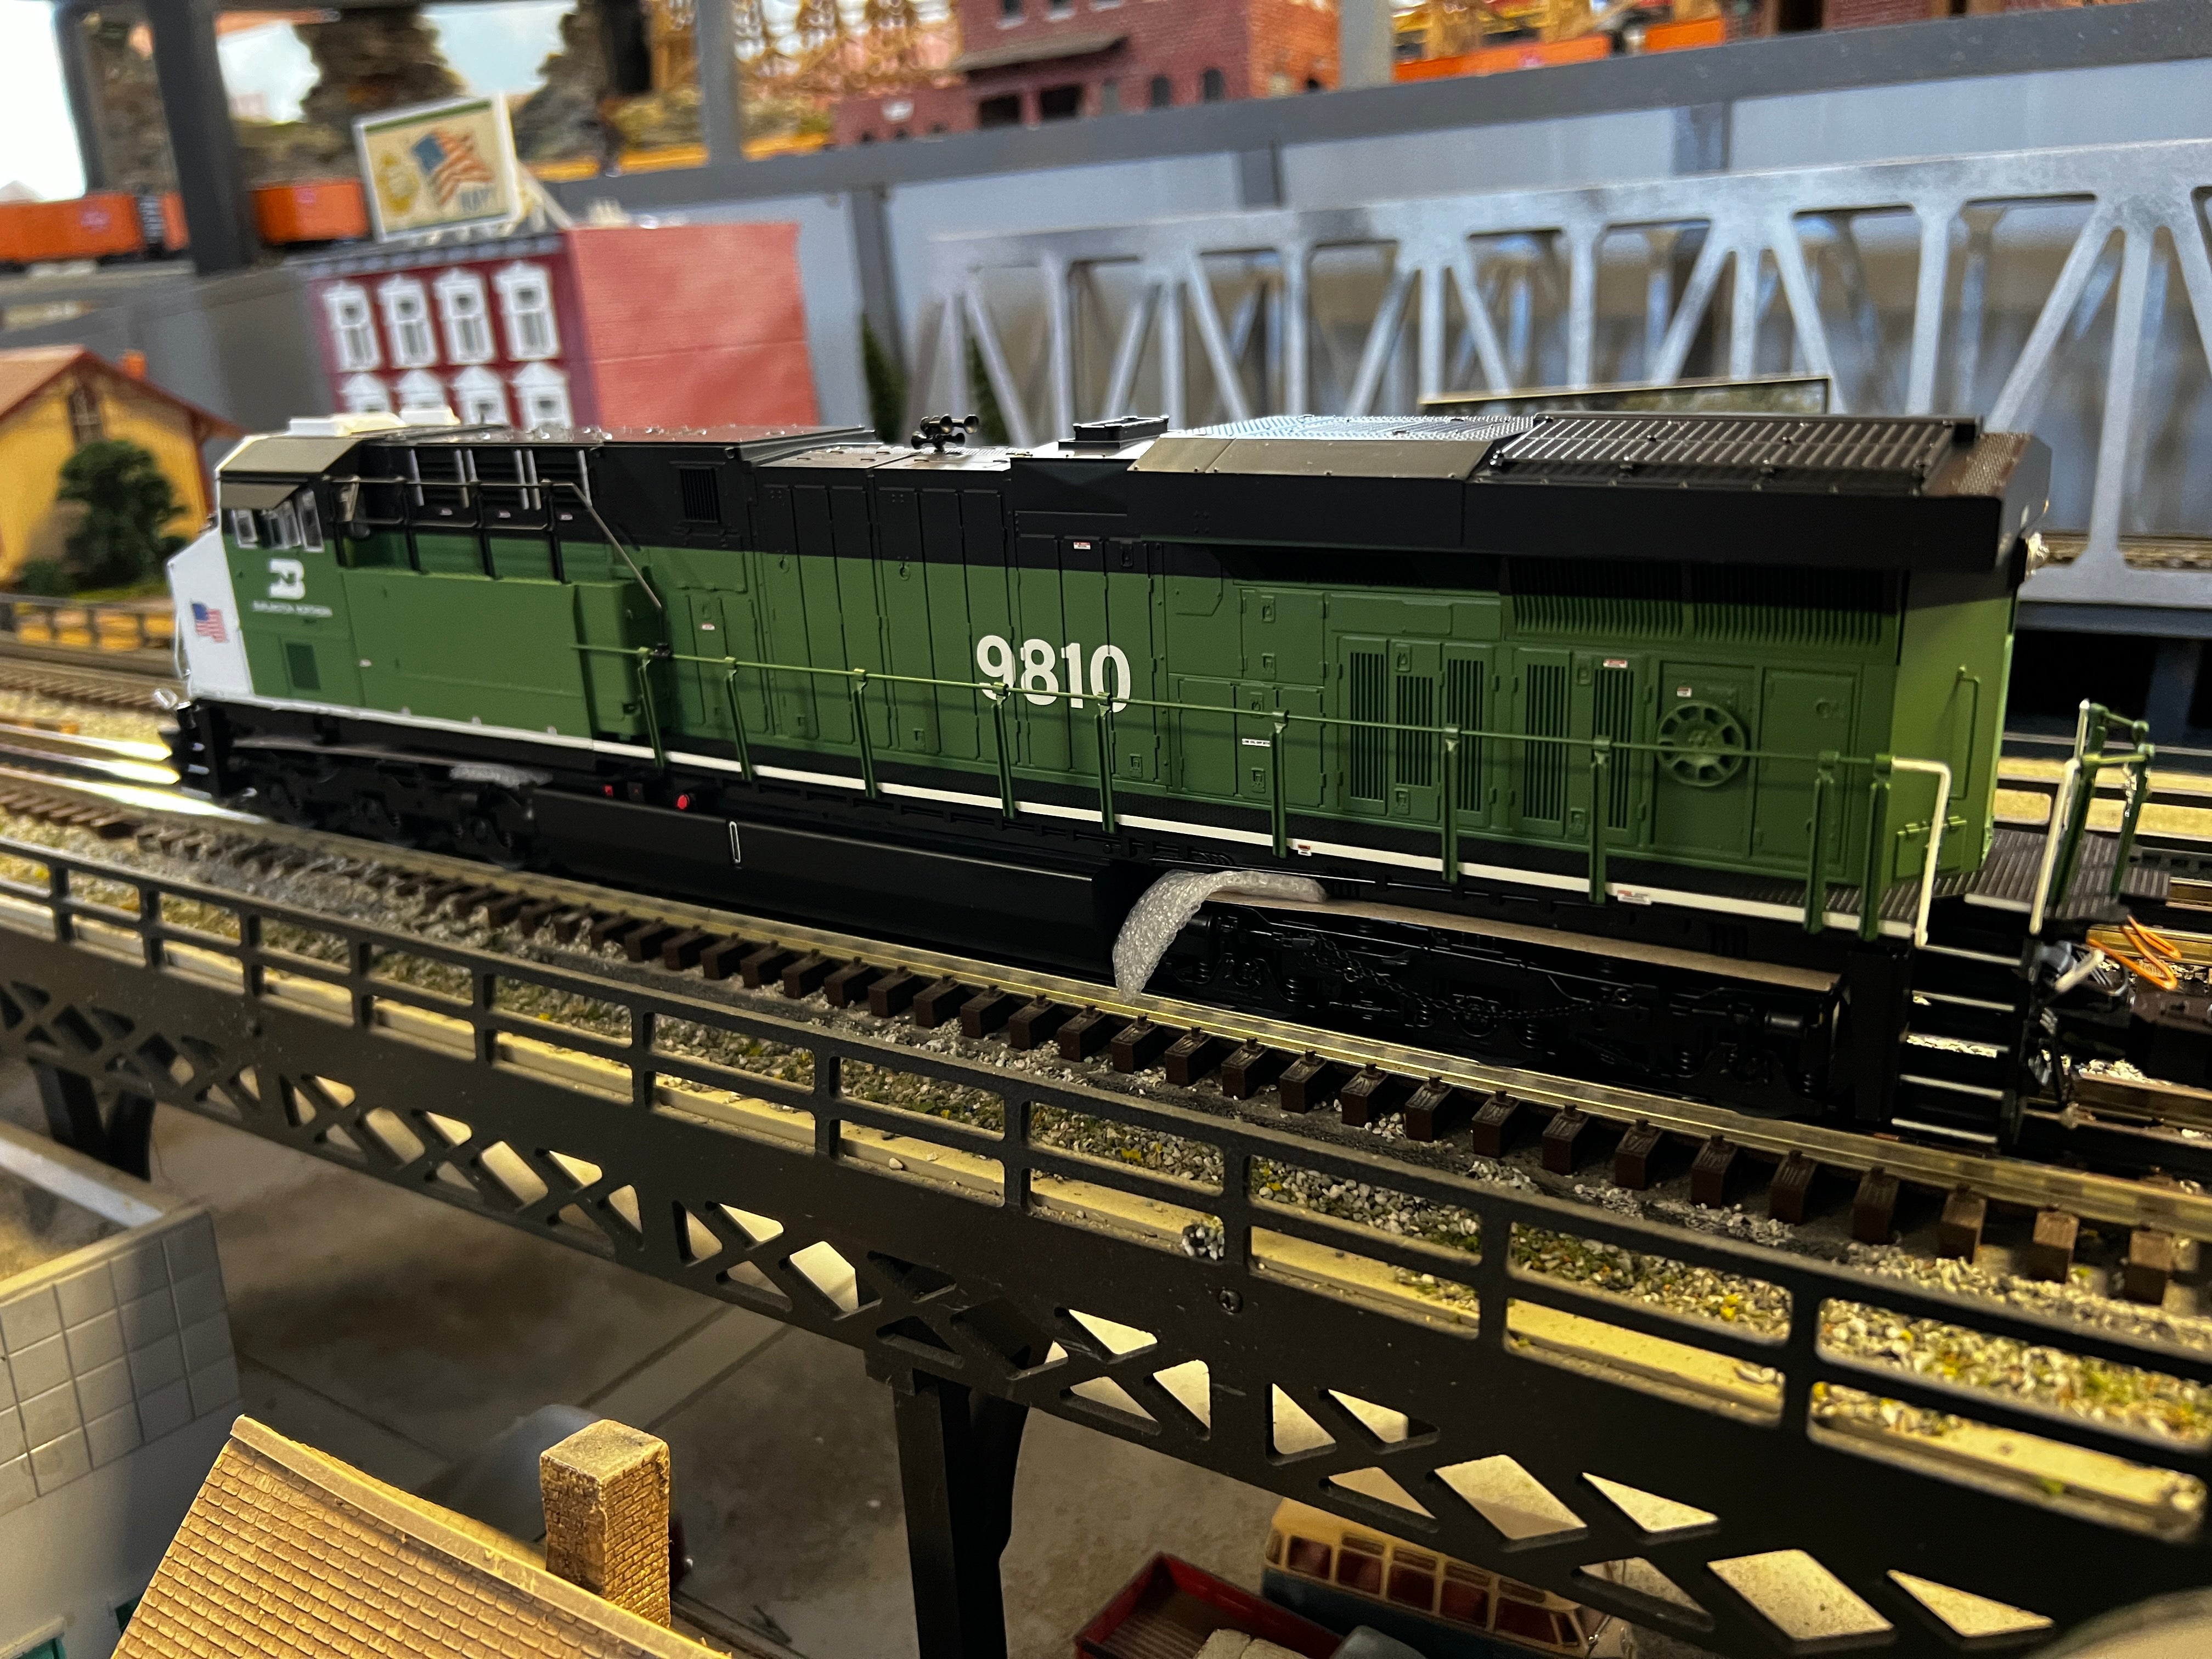 Lionel 2333431 - Legacy ES44AC Diesel Locomotive "Burlington Northern" #9800